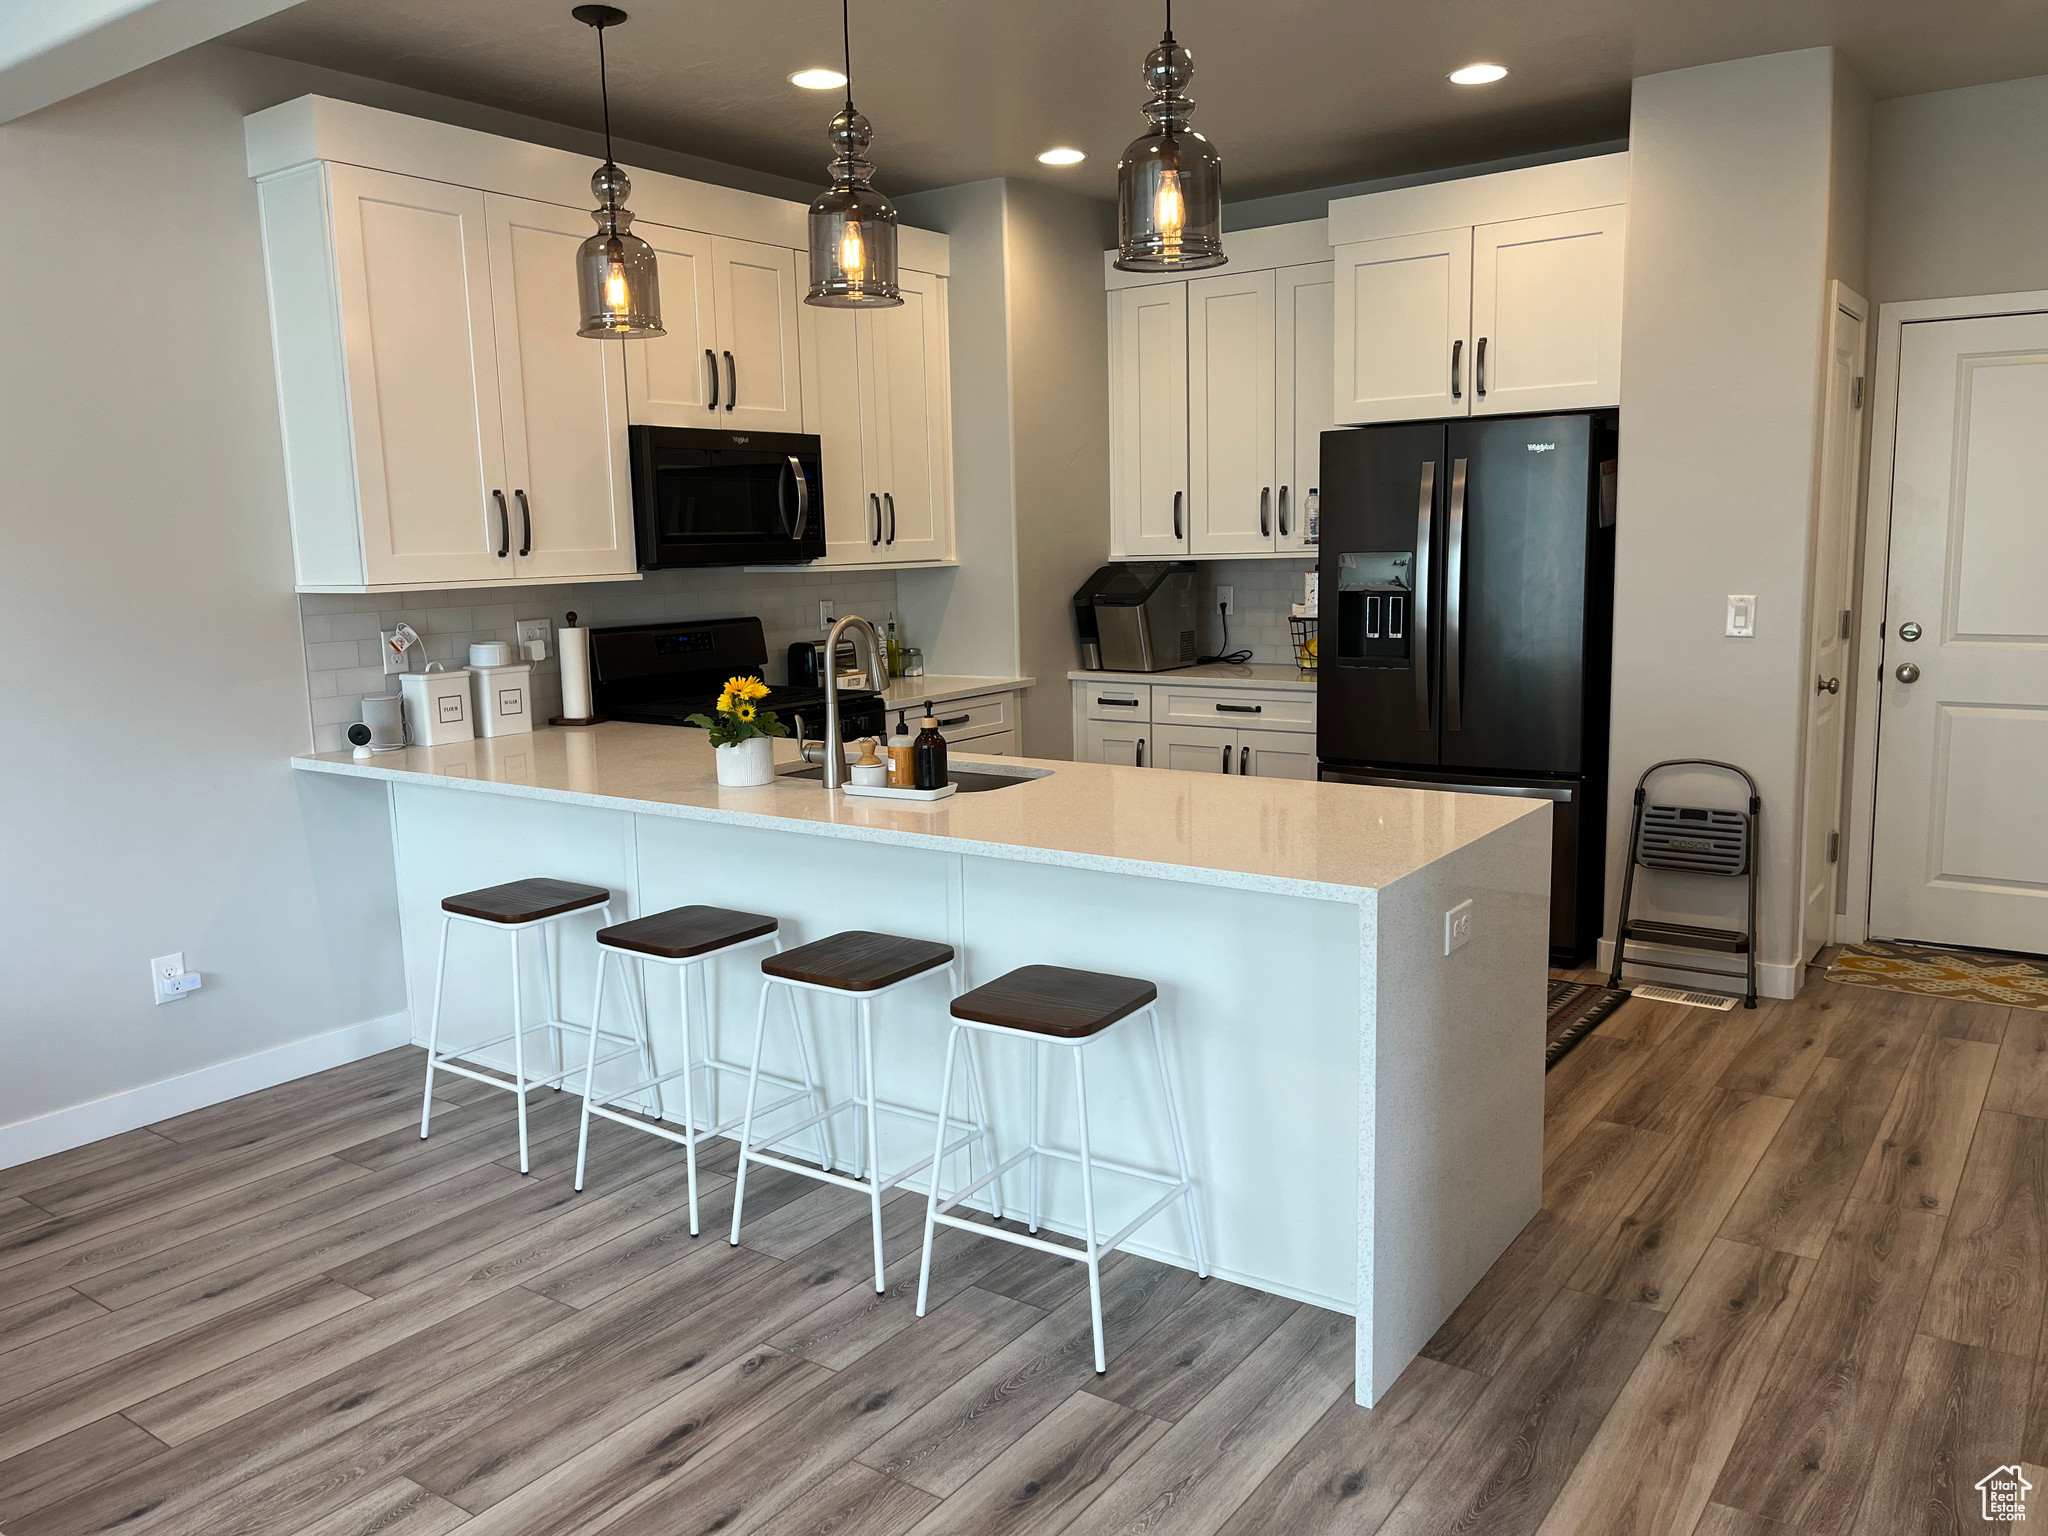 Kitchen featuring backsplash, appliances, wood-type flooring, white cabinets, and sink